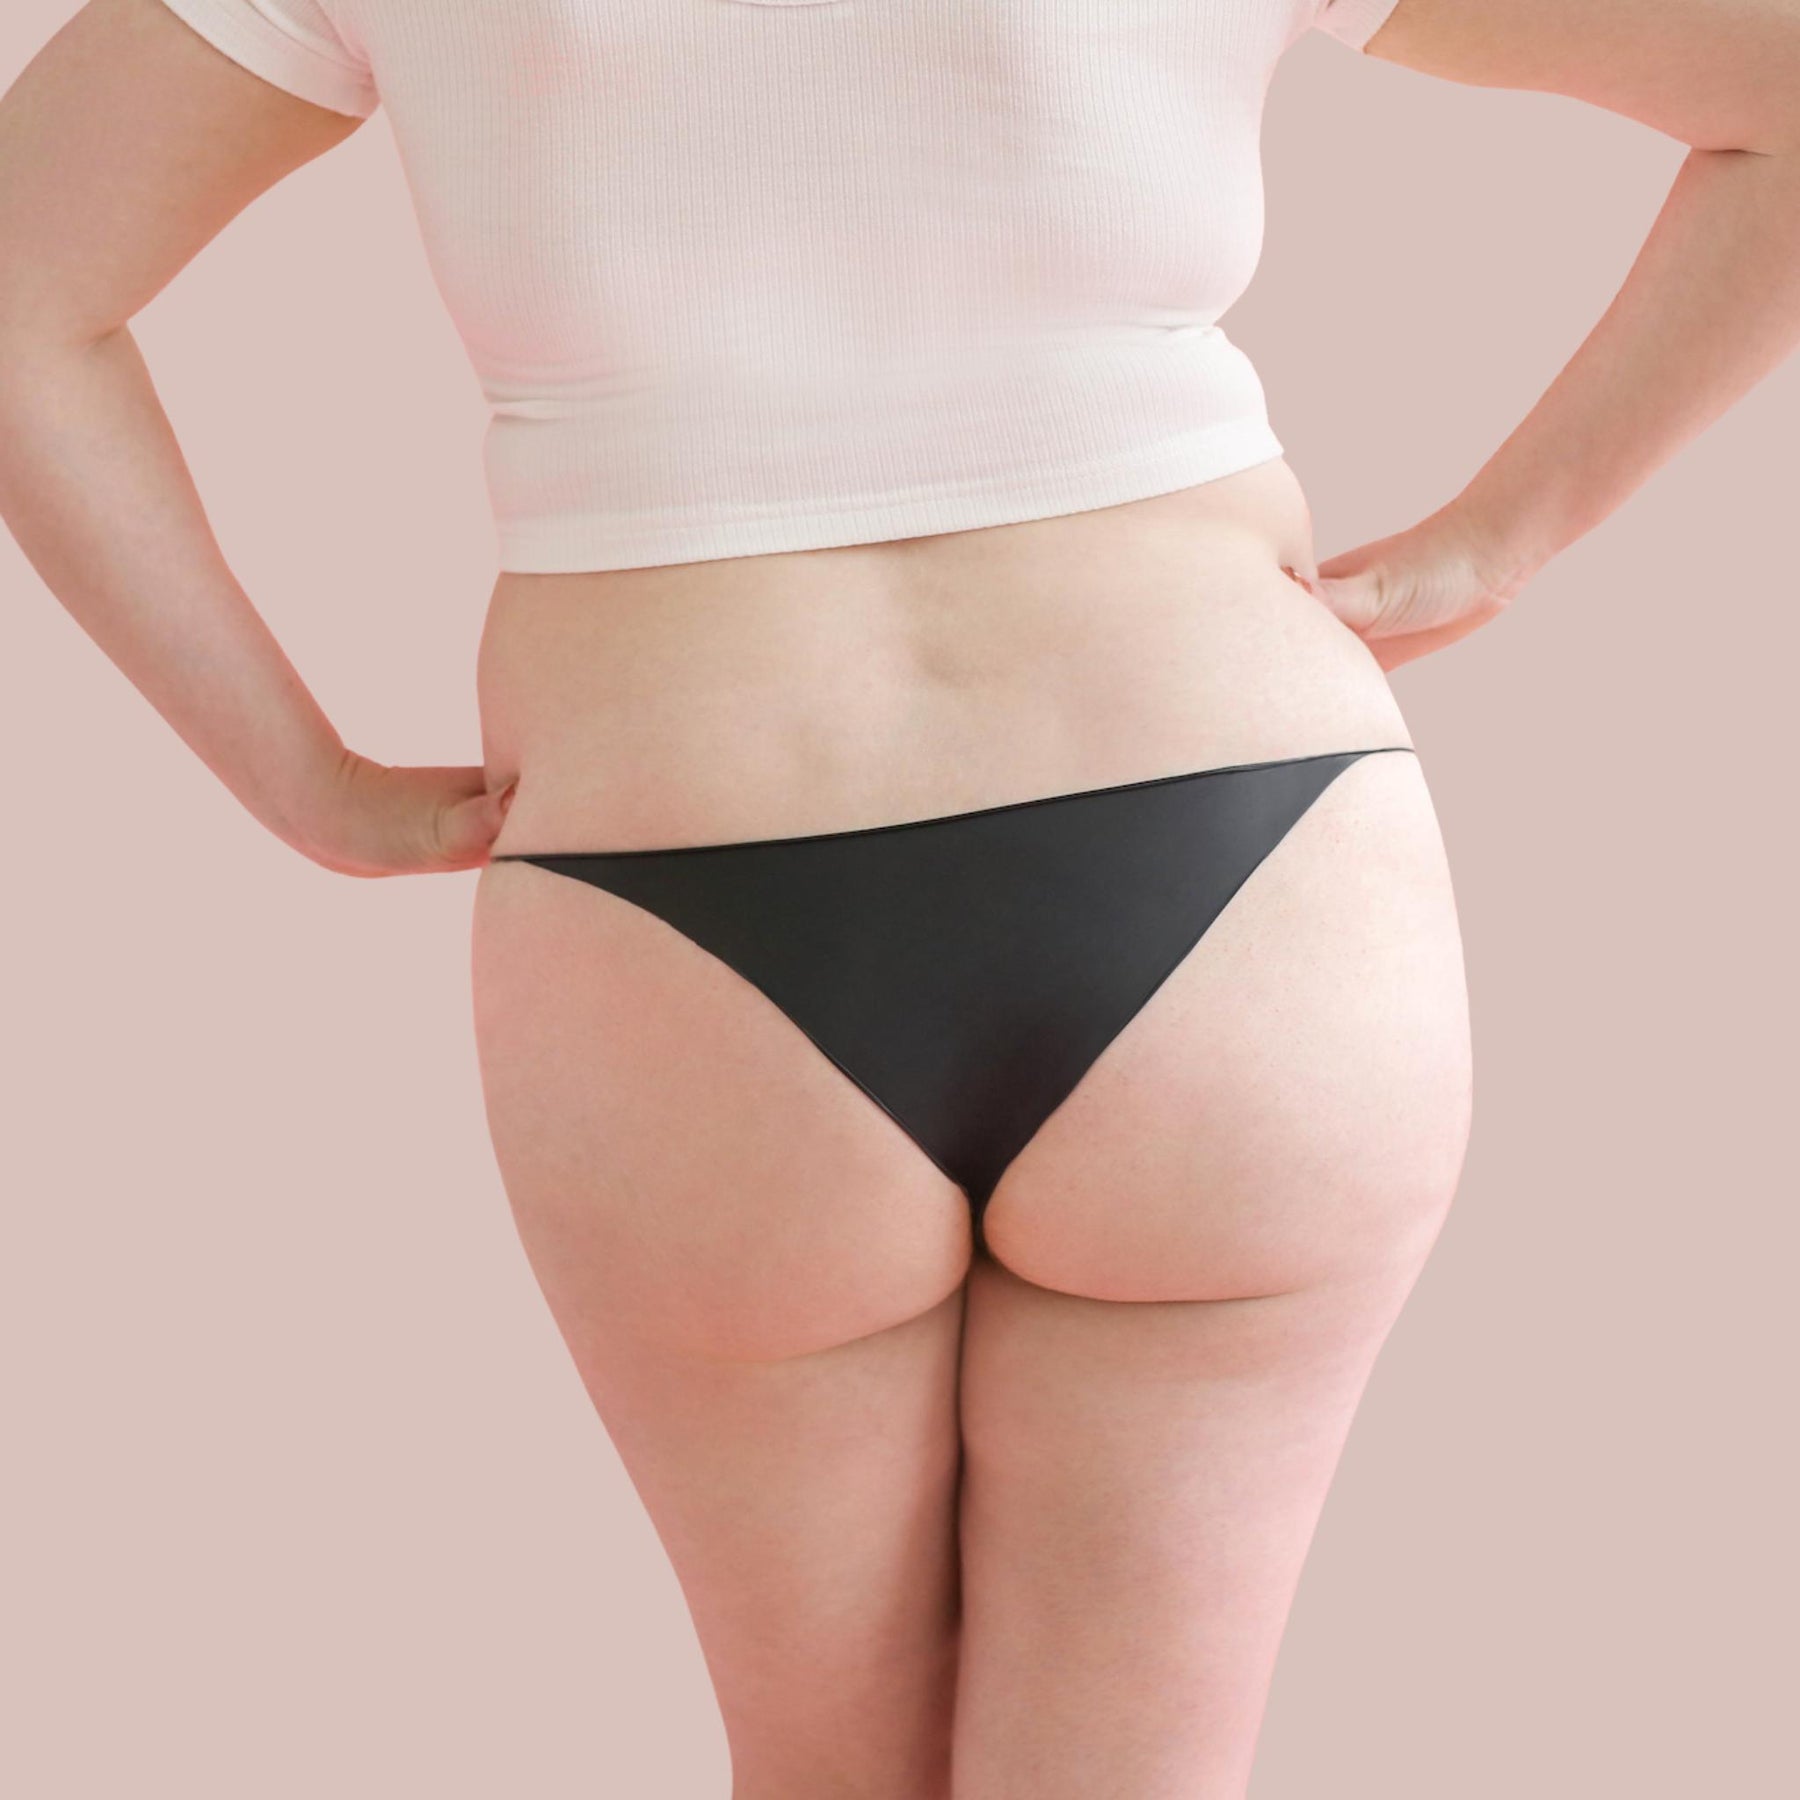 Lorals model Amanda demonstrates the back view of Black Latex Panties in Bikini Style